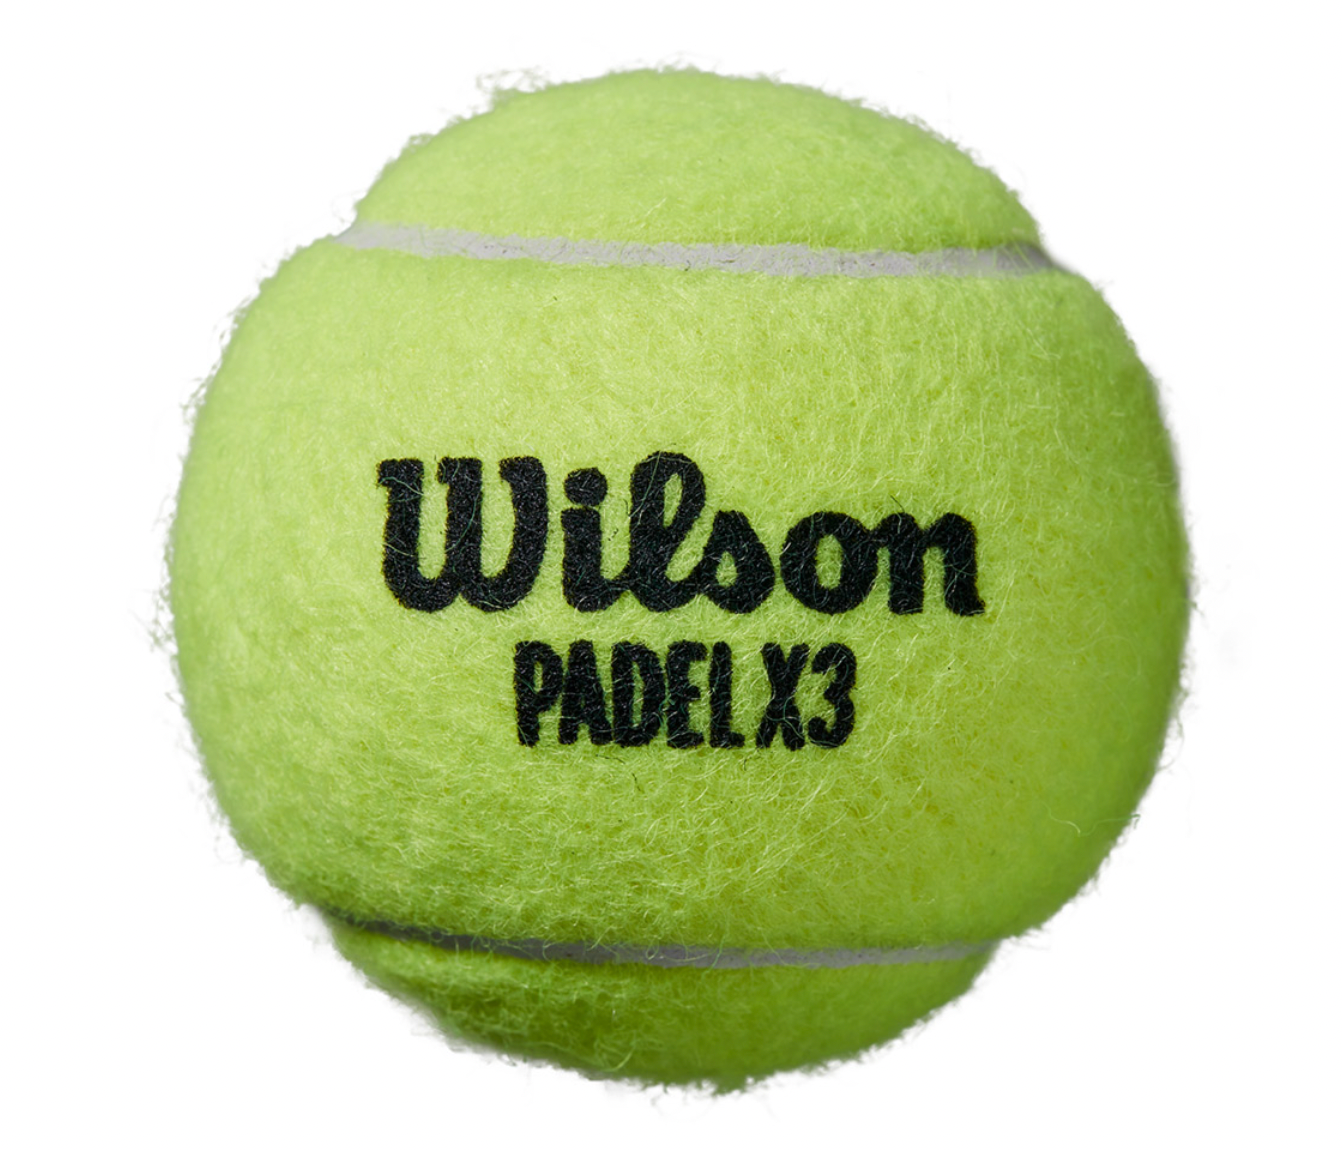 Wilson x3 Padel Ball